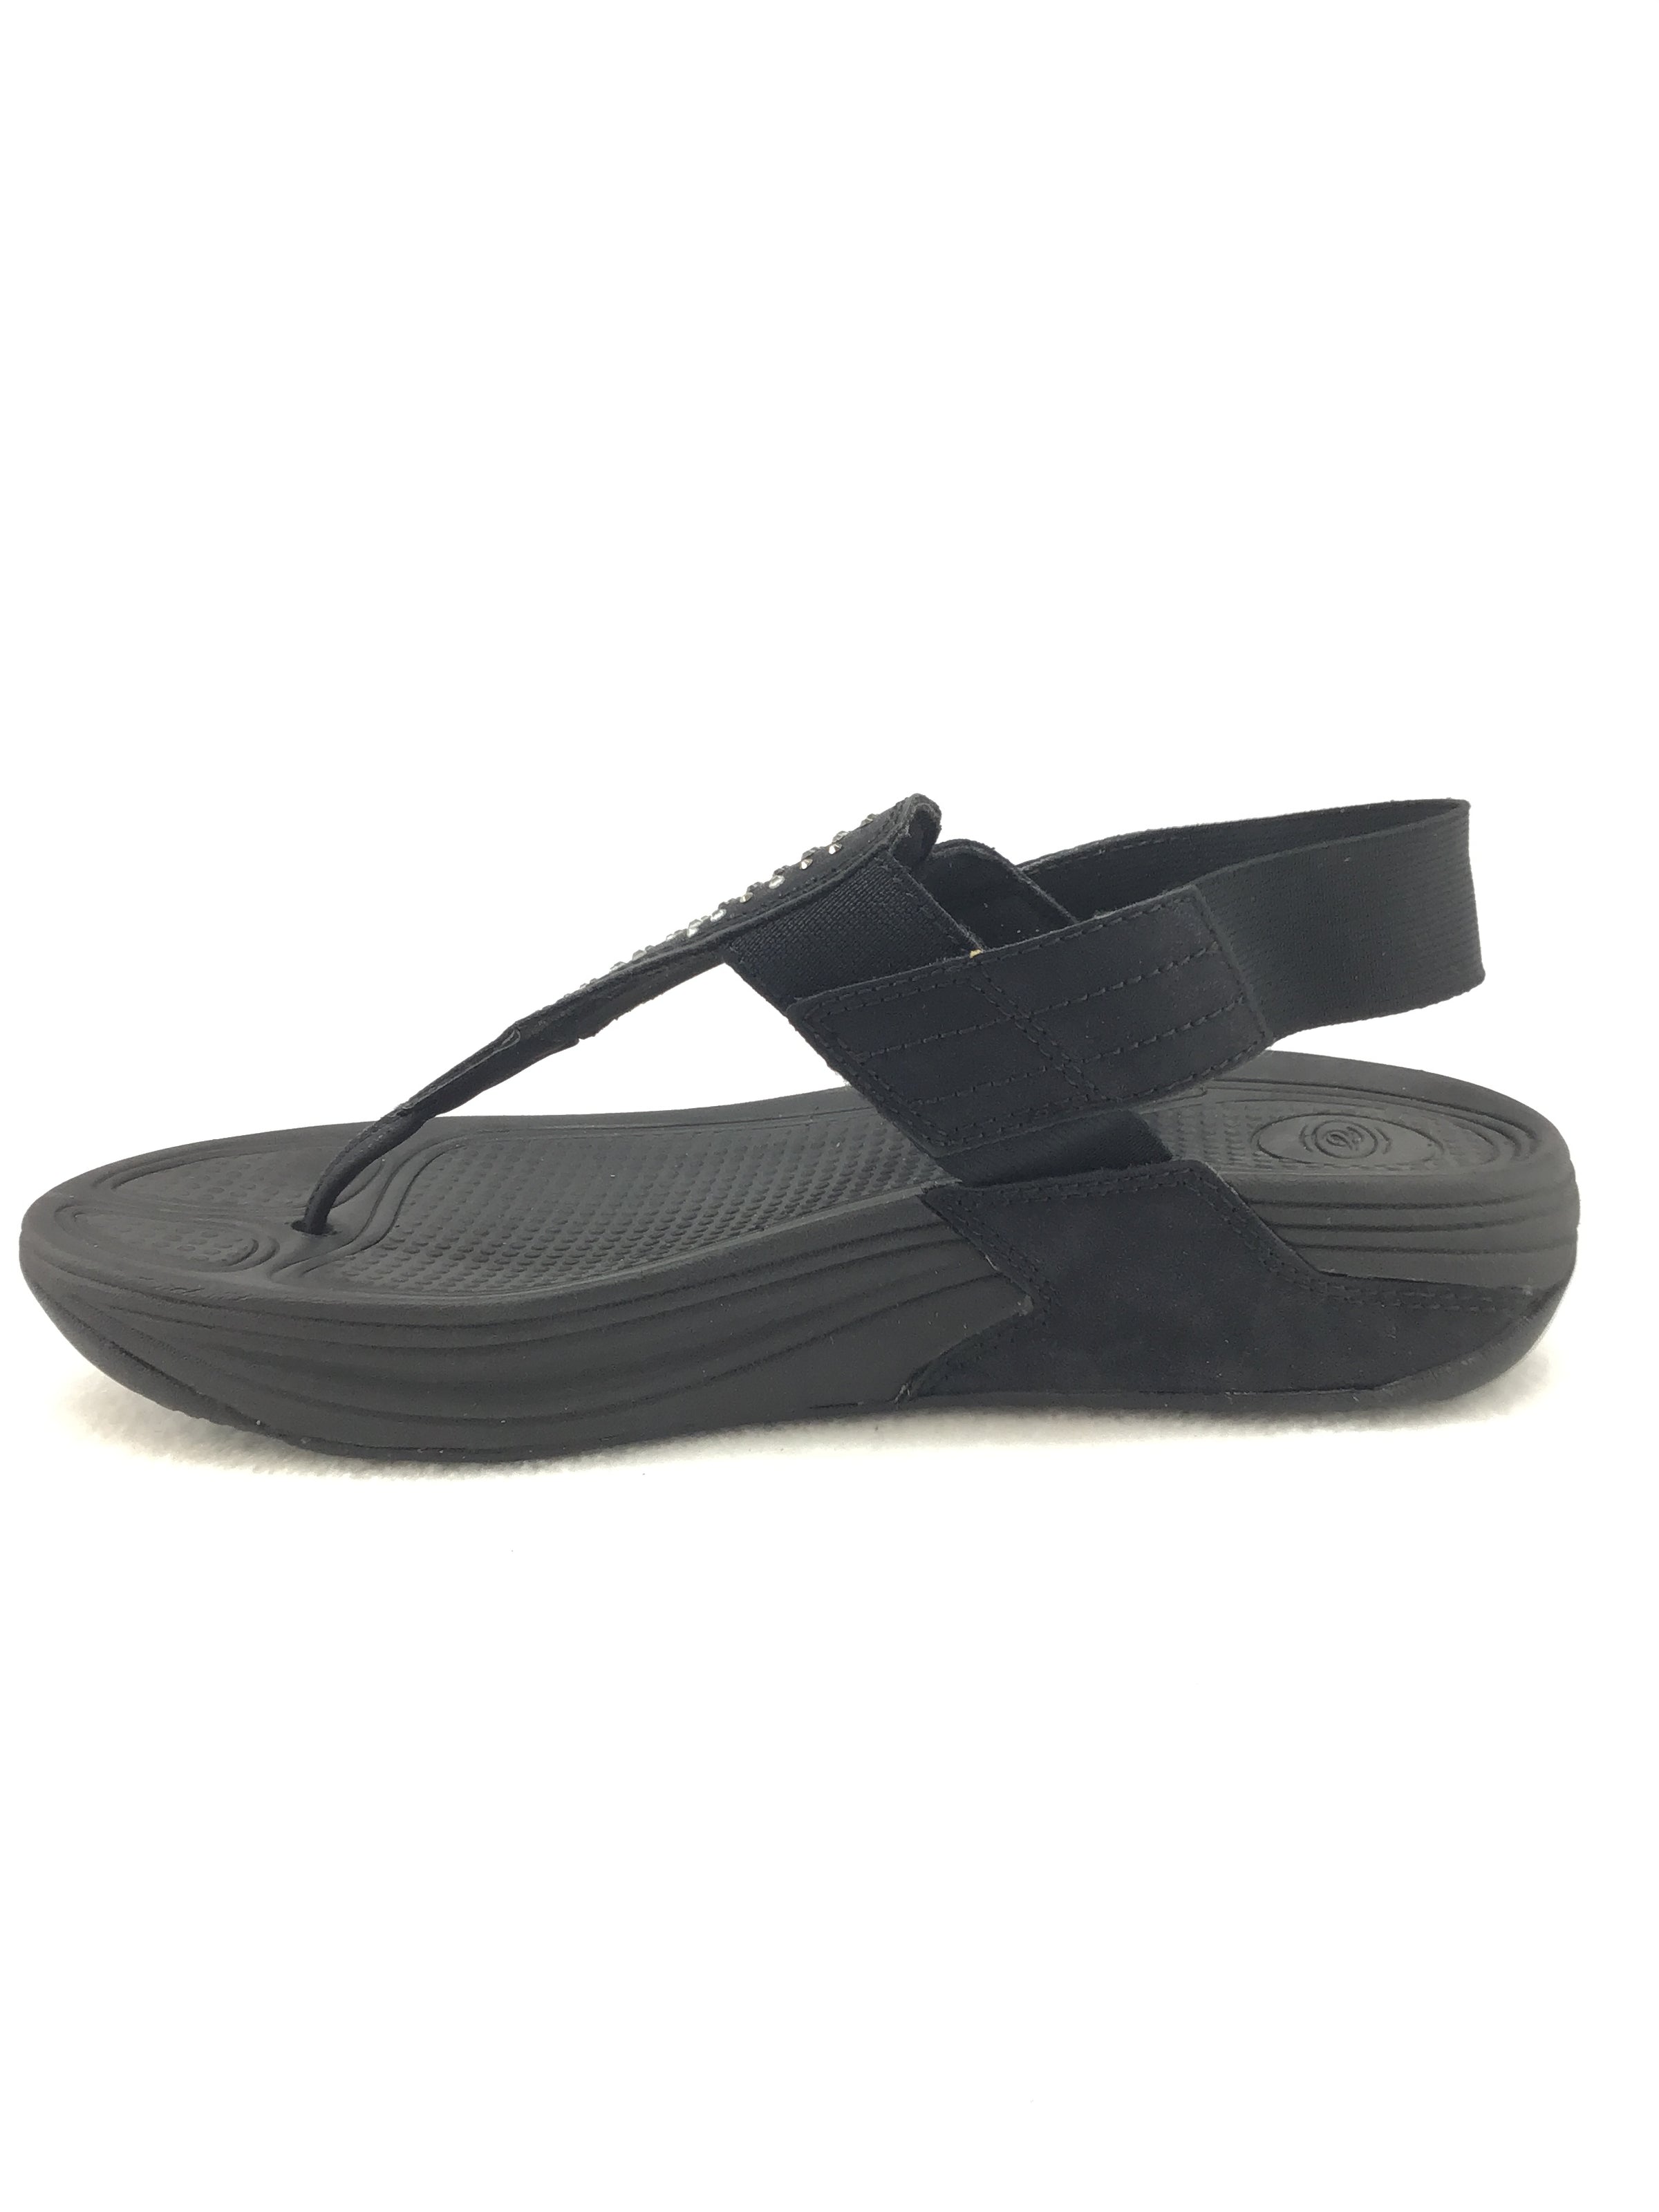 Easyspirit Sefabienta3 Sandals Size 9